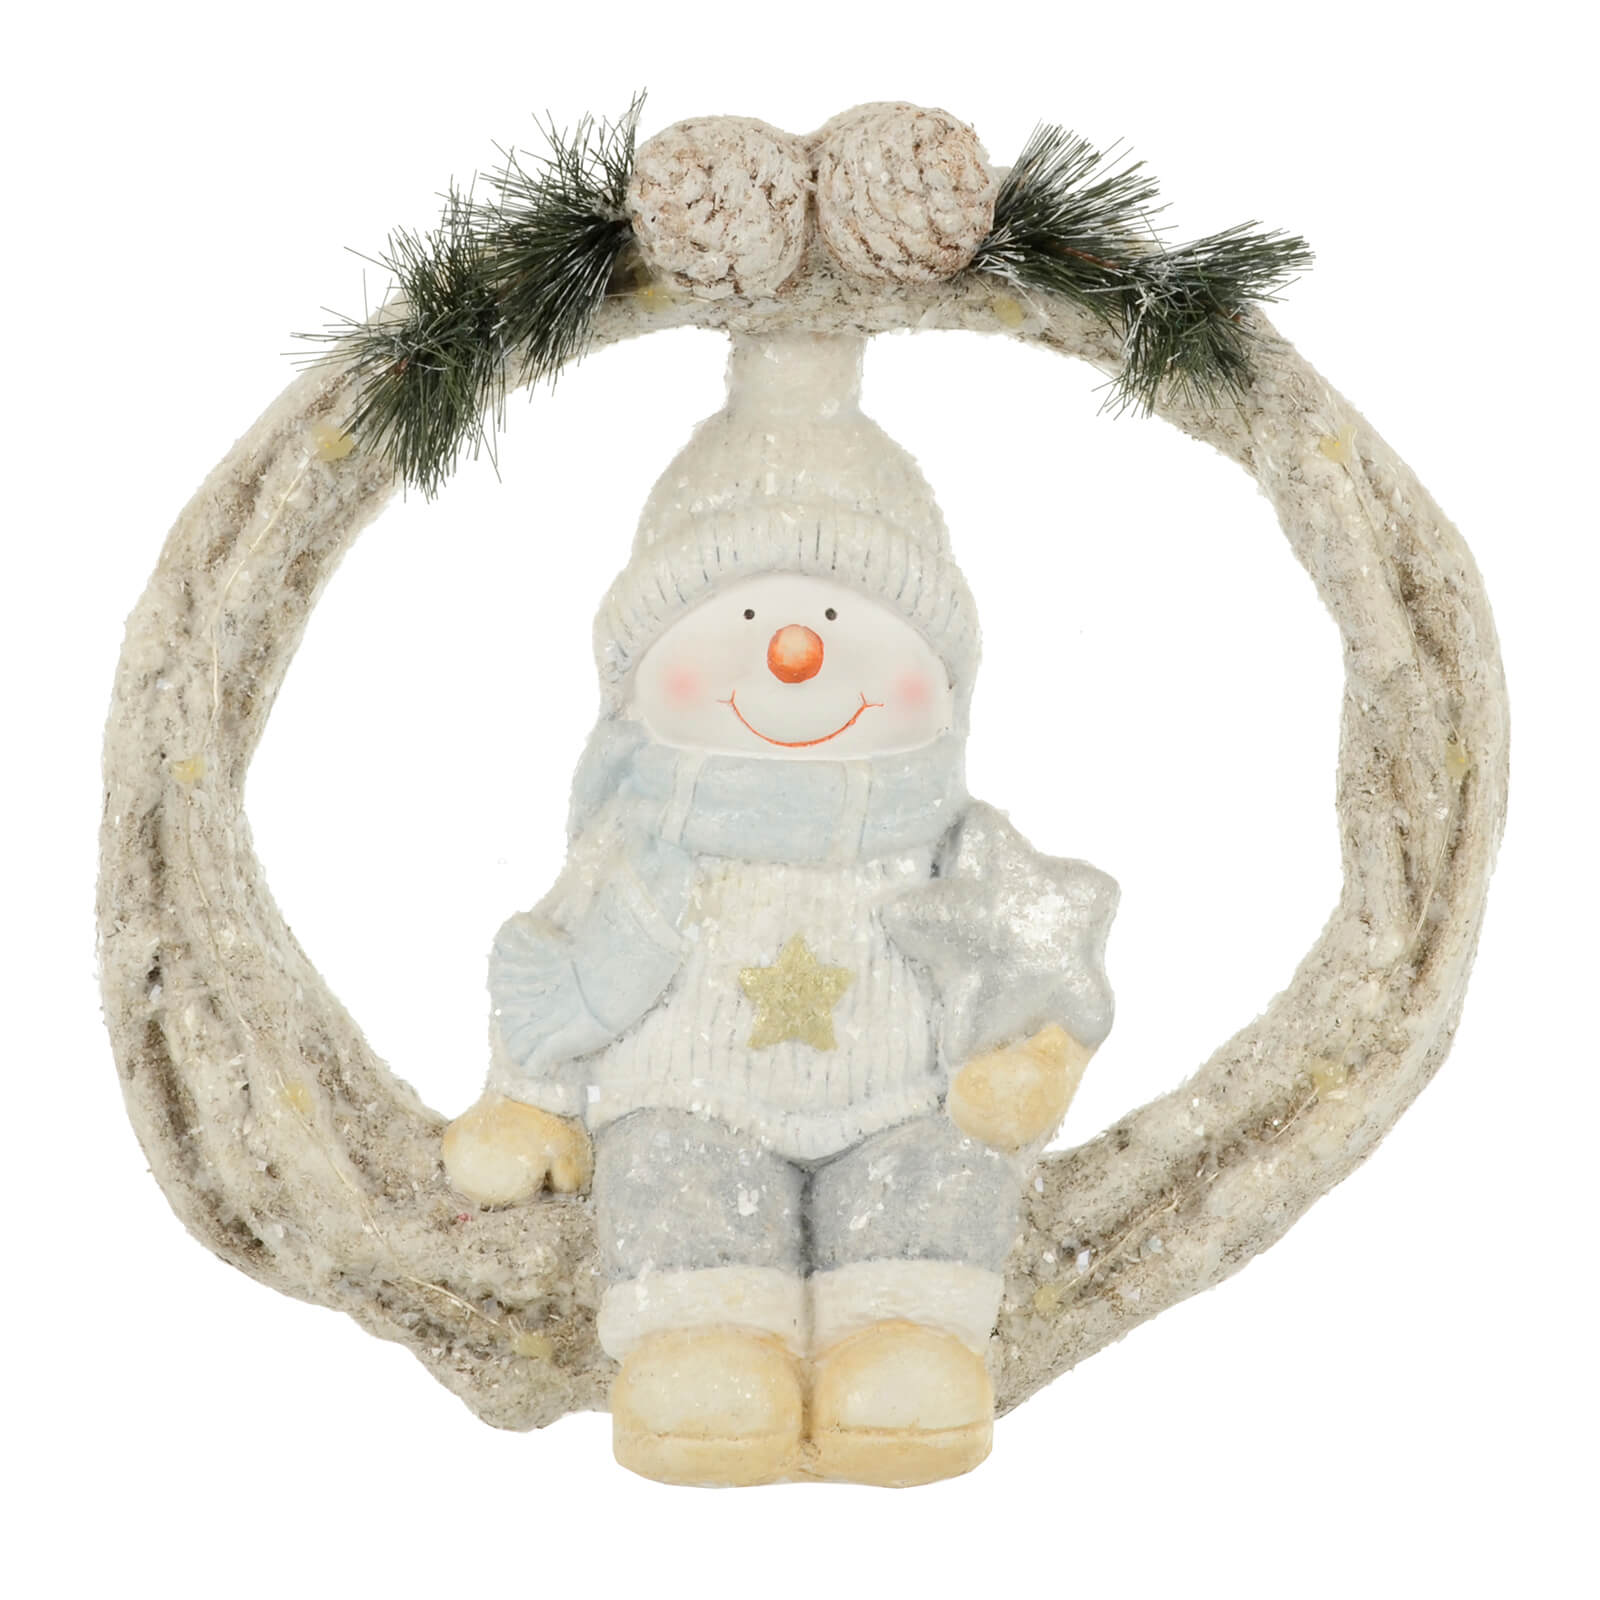 Mr Crimbo Light Up Christmas Figure Wreath Decoration Ceramic 40cm - MrCrimbo.co.uk -XS7143 - Snowman -